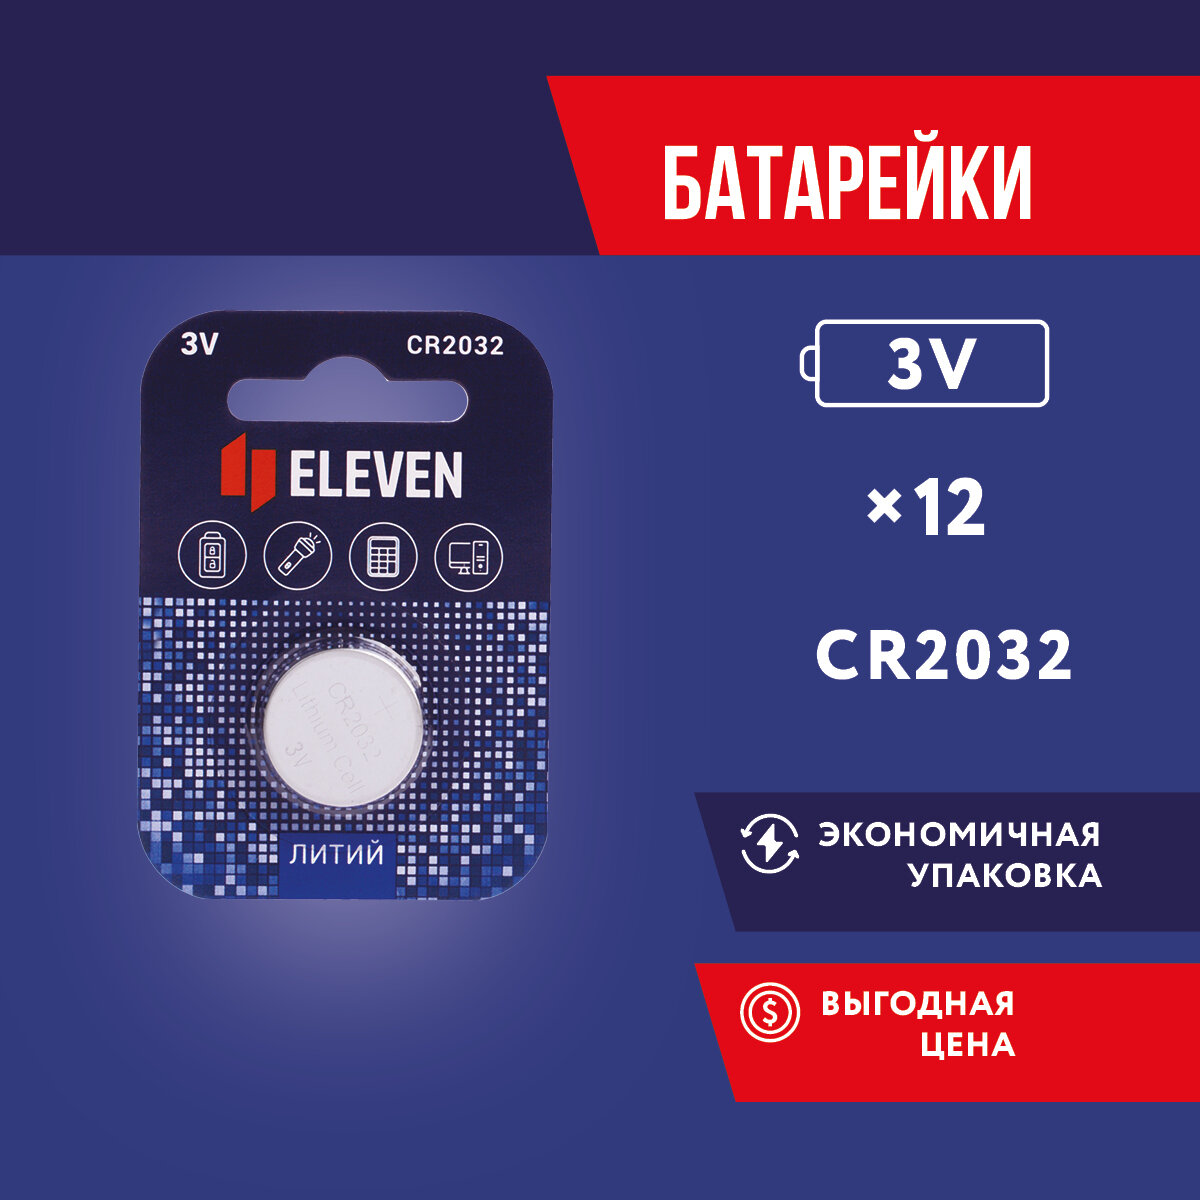 Батарейки CR2032 таблетки 12 штук литиевые 3V Eleven / Батарейка для часов, весов, калькулятора